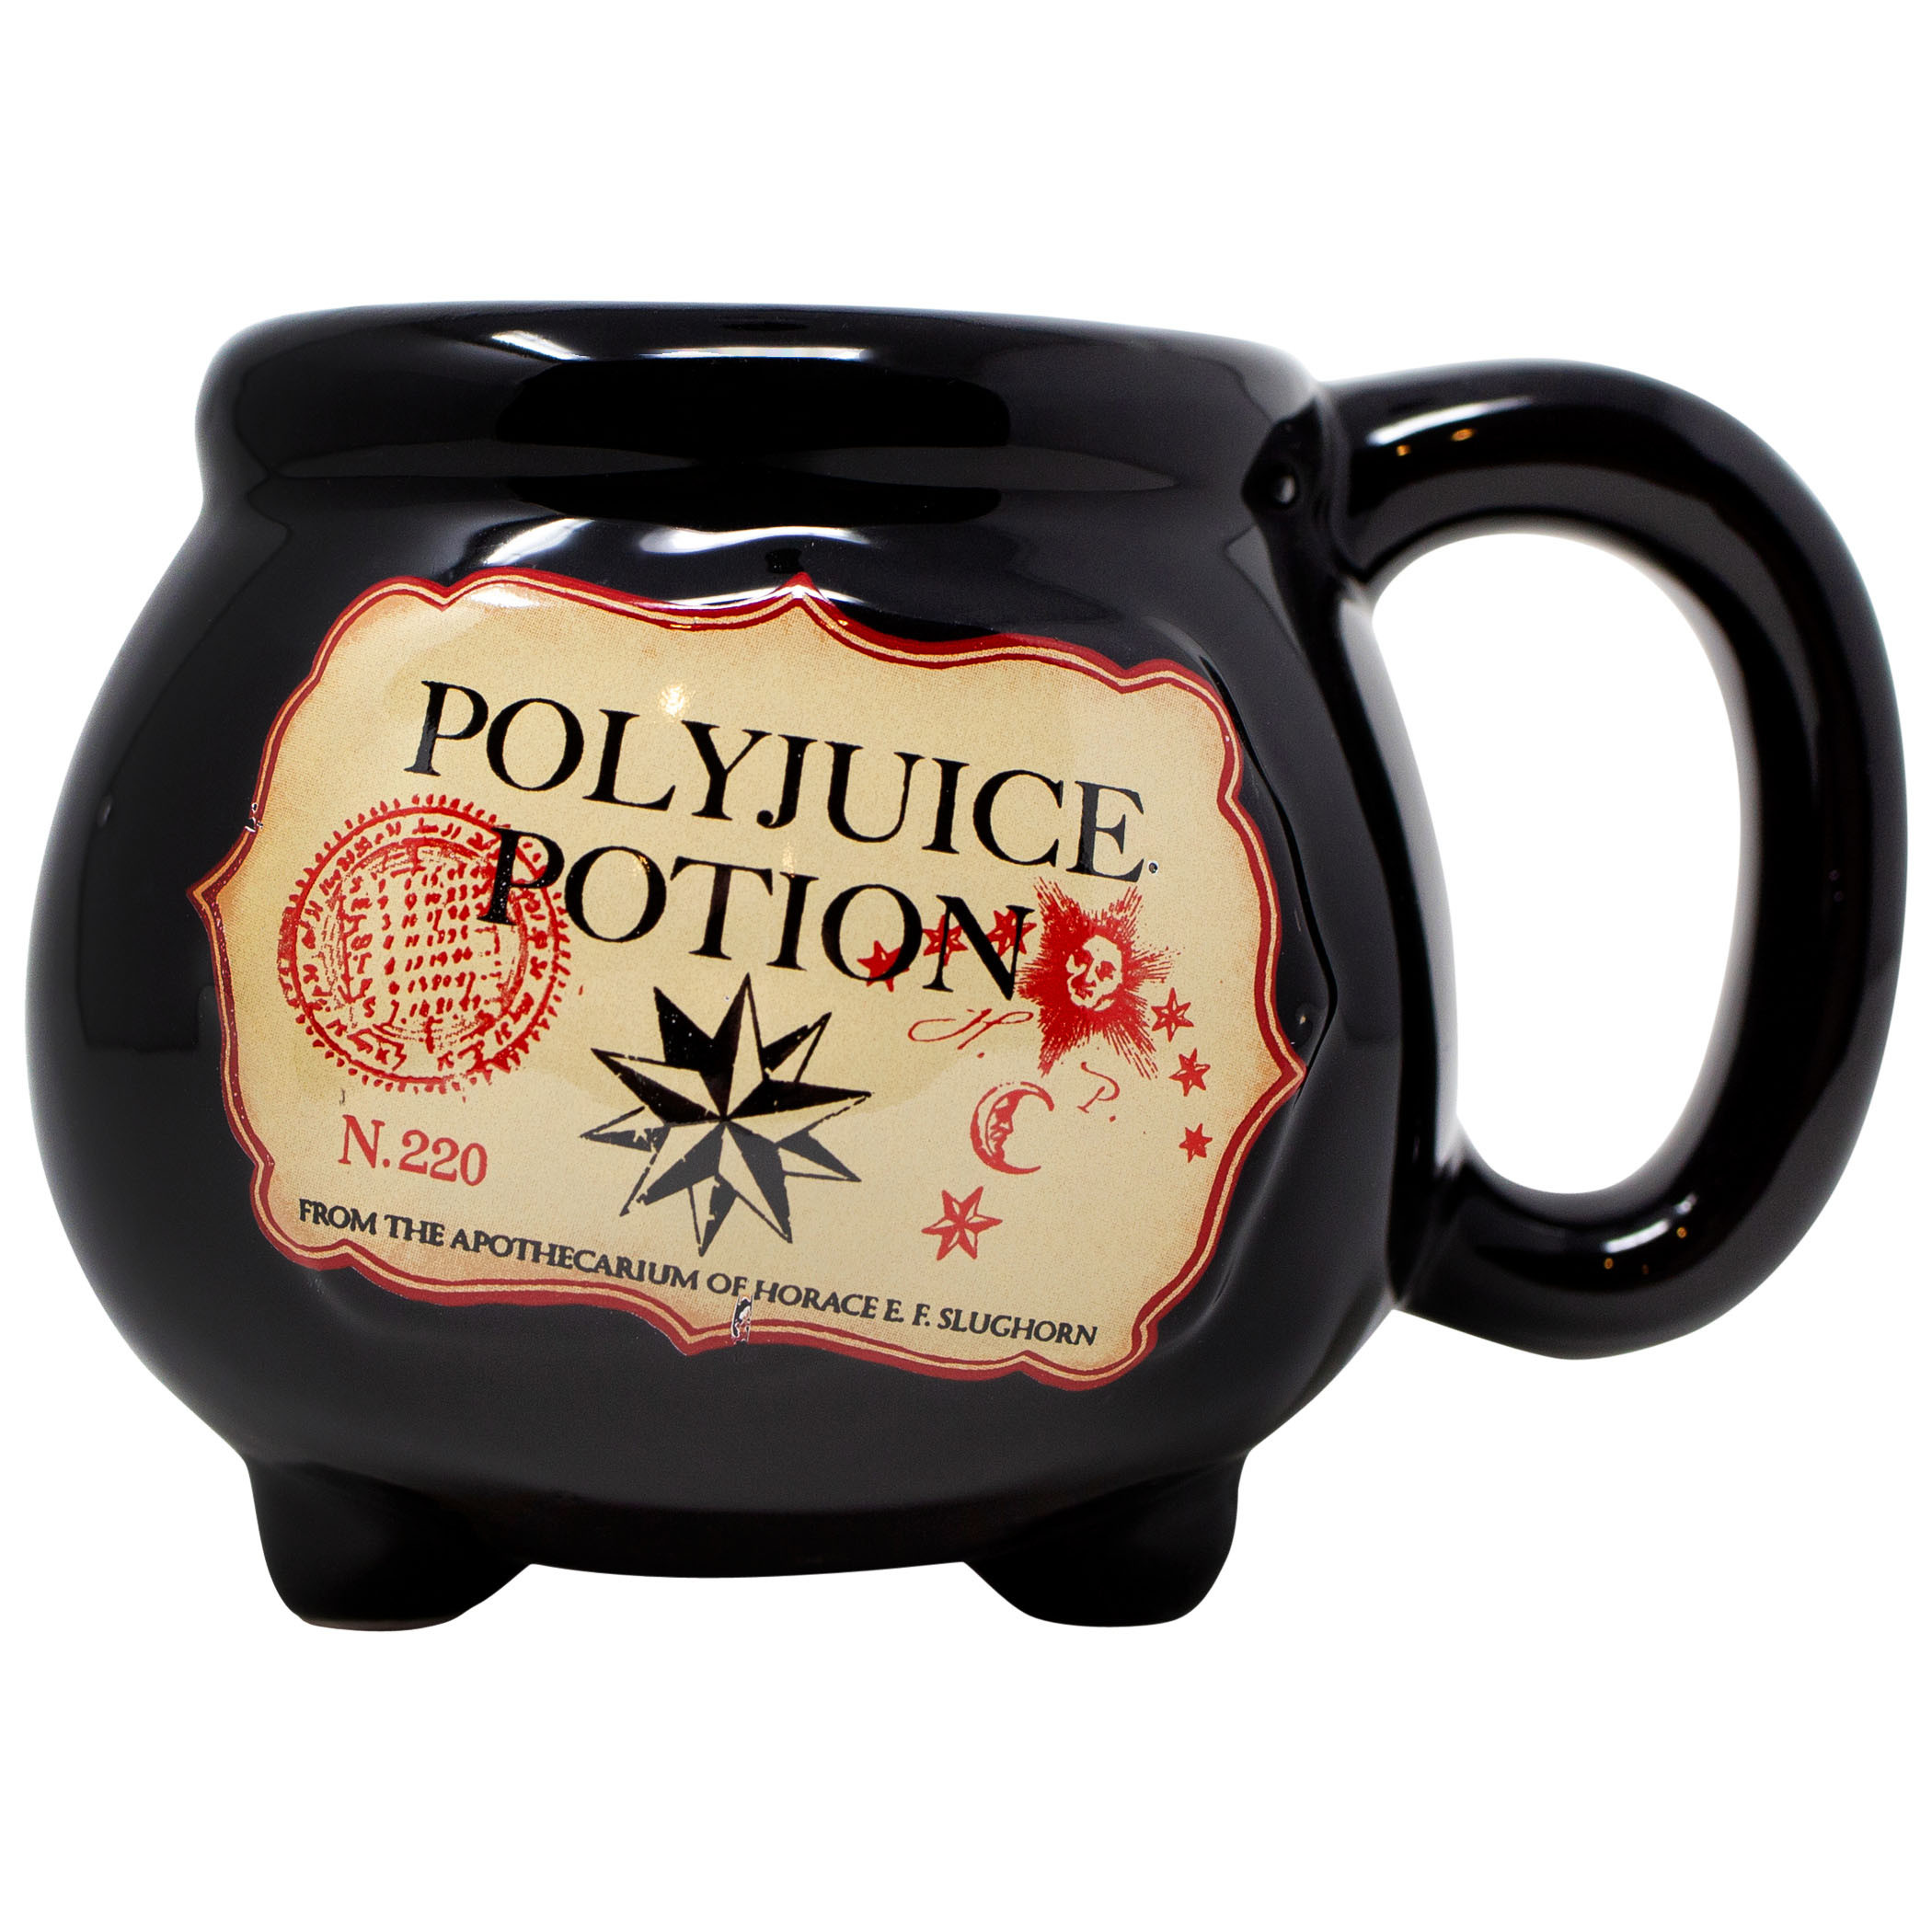 Harry Potter Polyjuice Potion Cauldron Mug